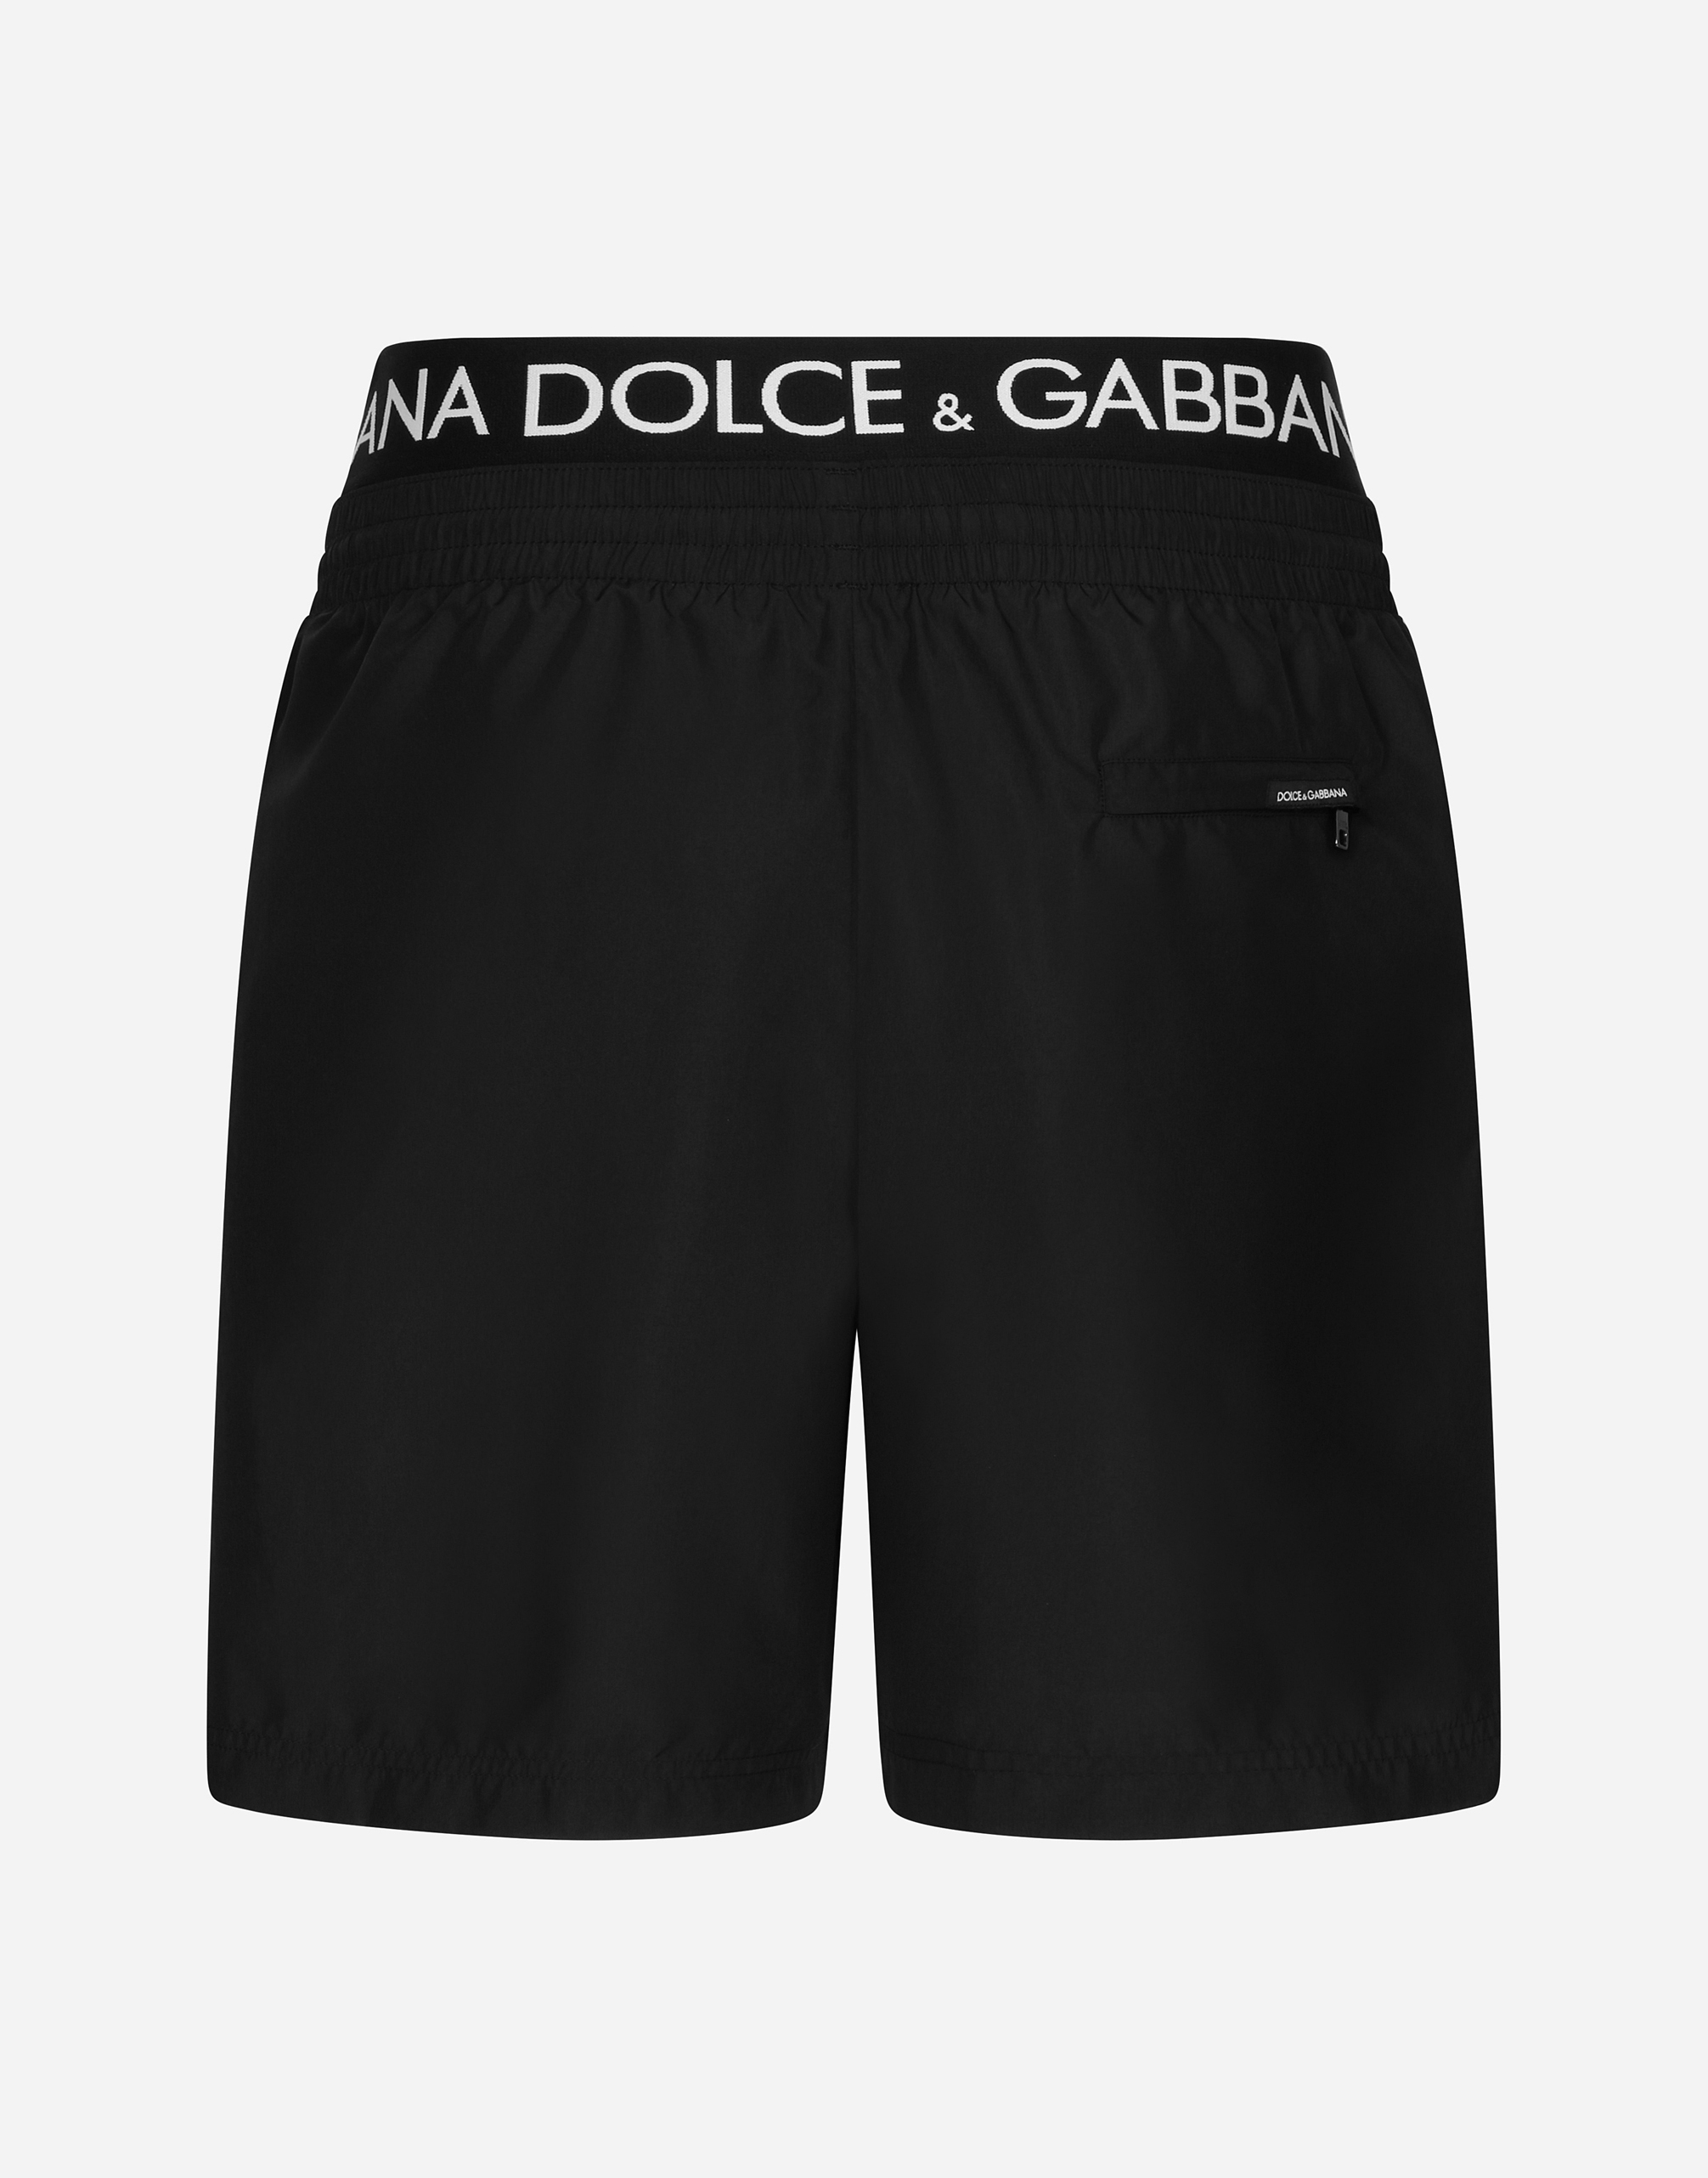 Men's Beachwear | Dolce&Gabbana